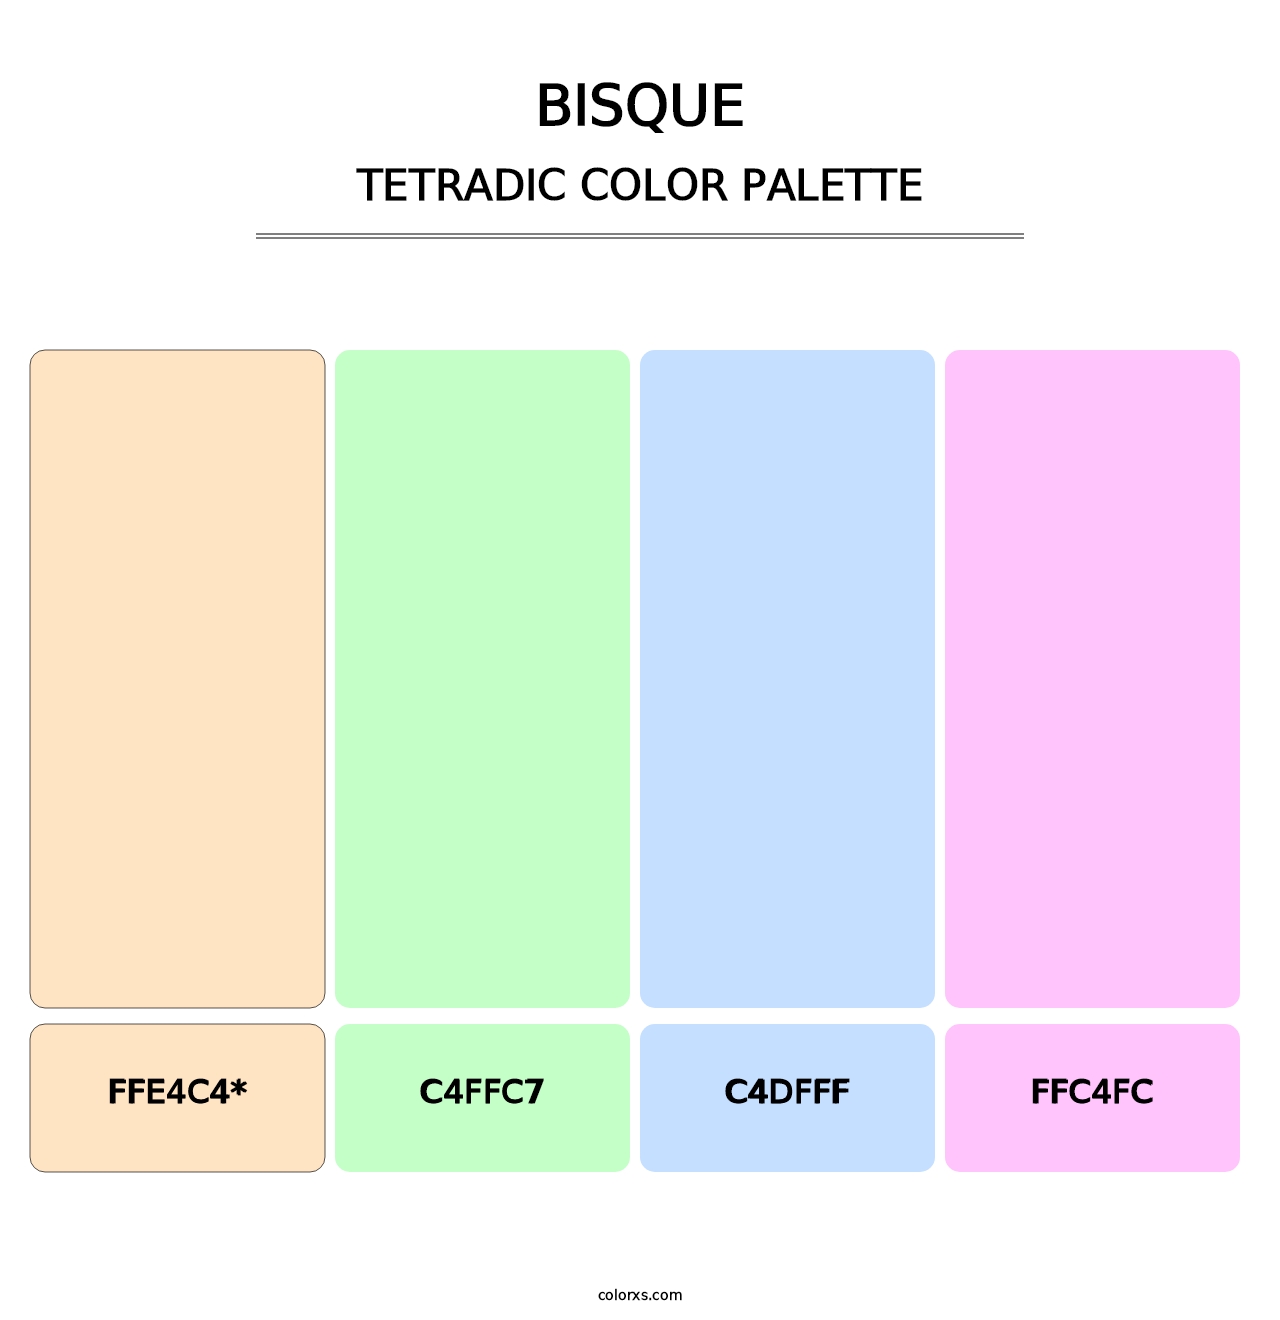 Bisque - Tetradic Color Palette